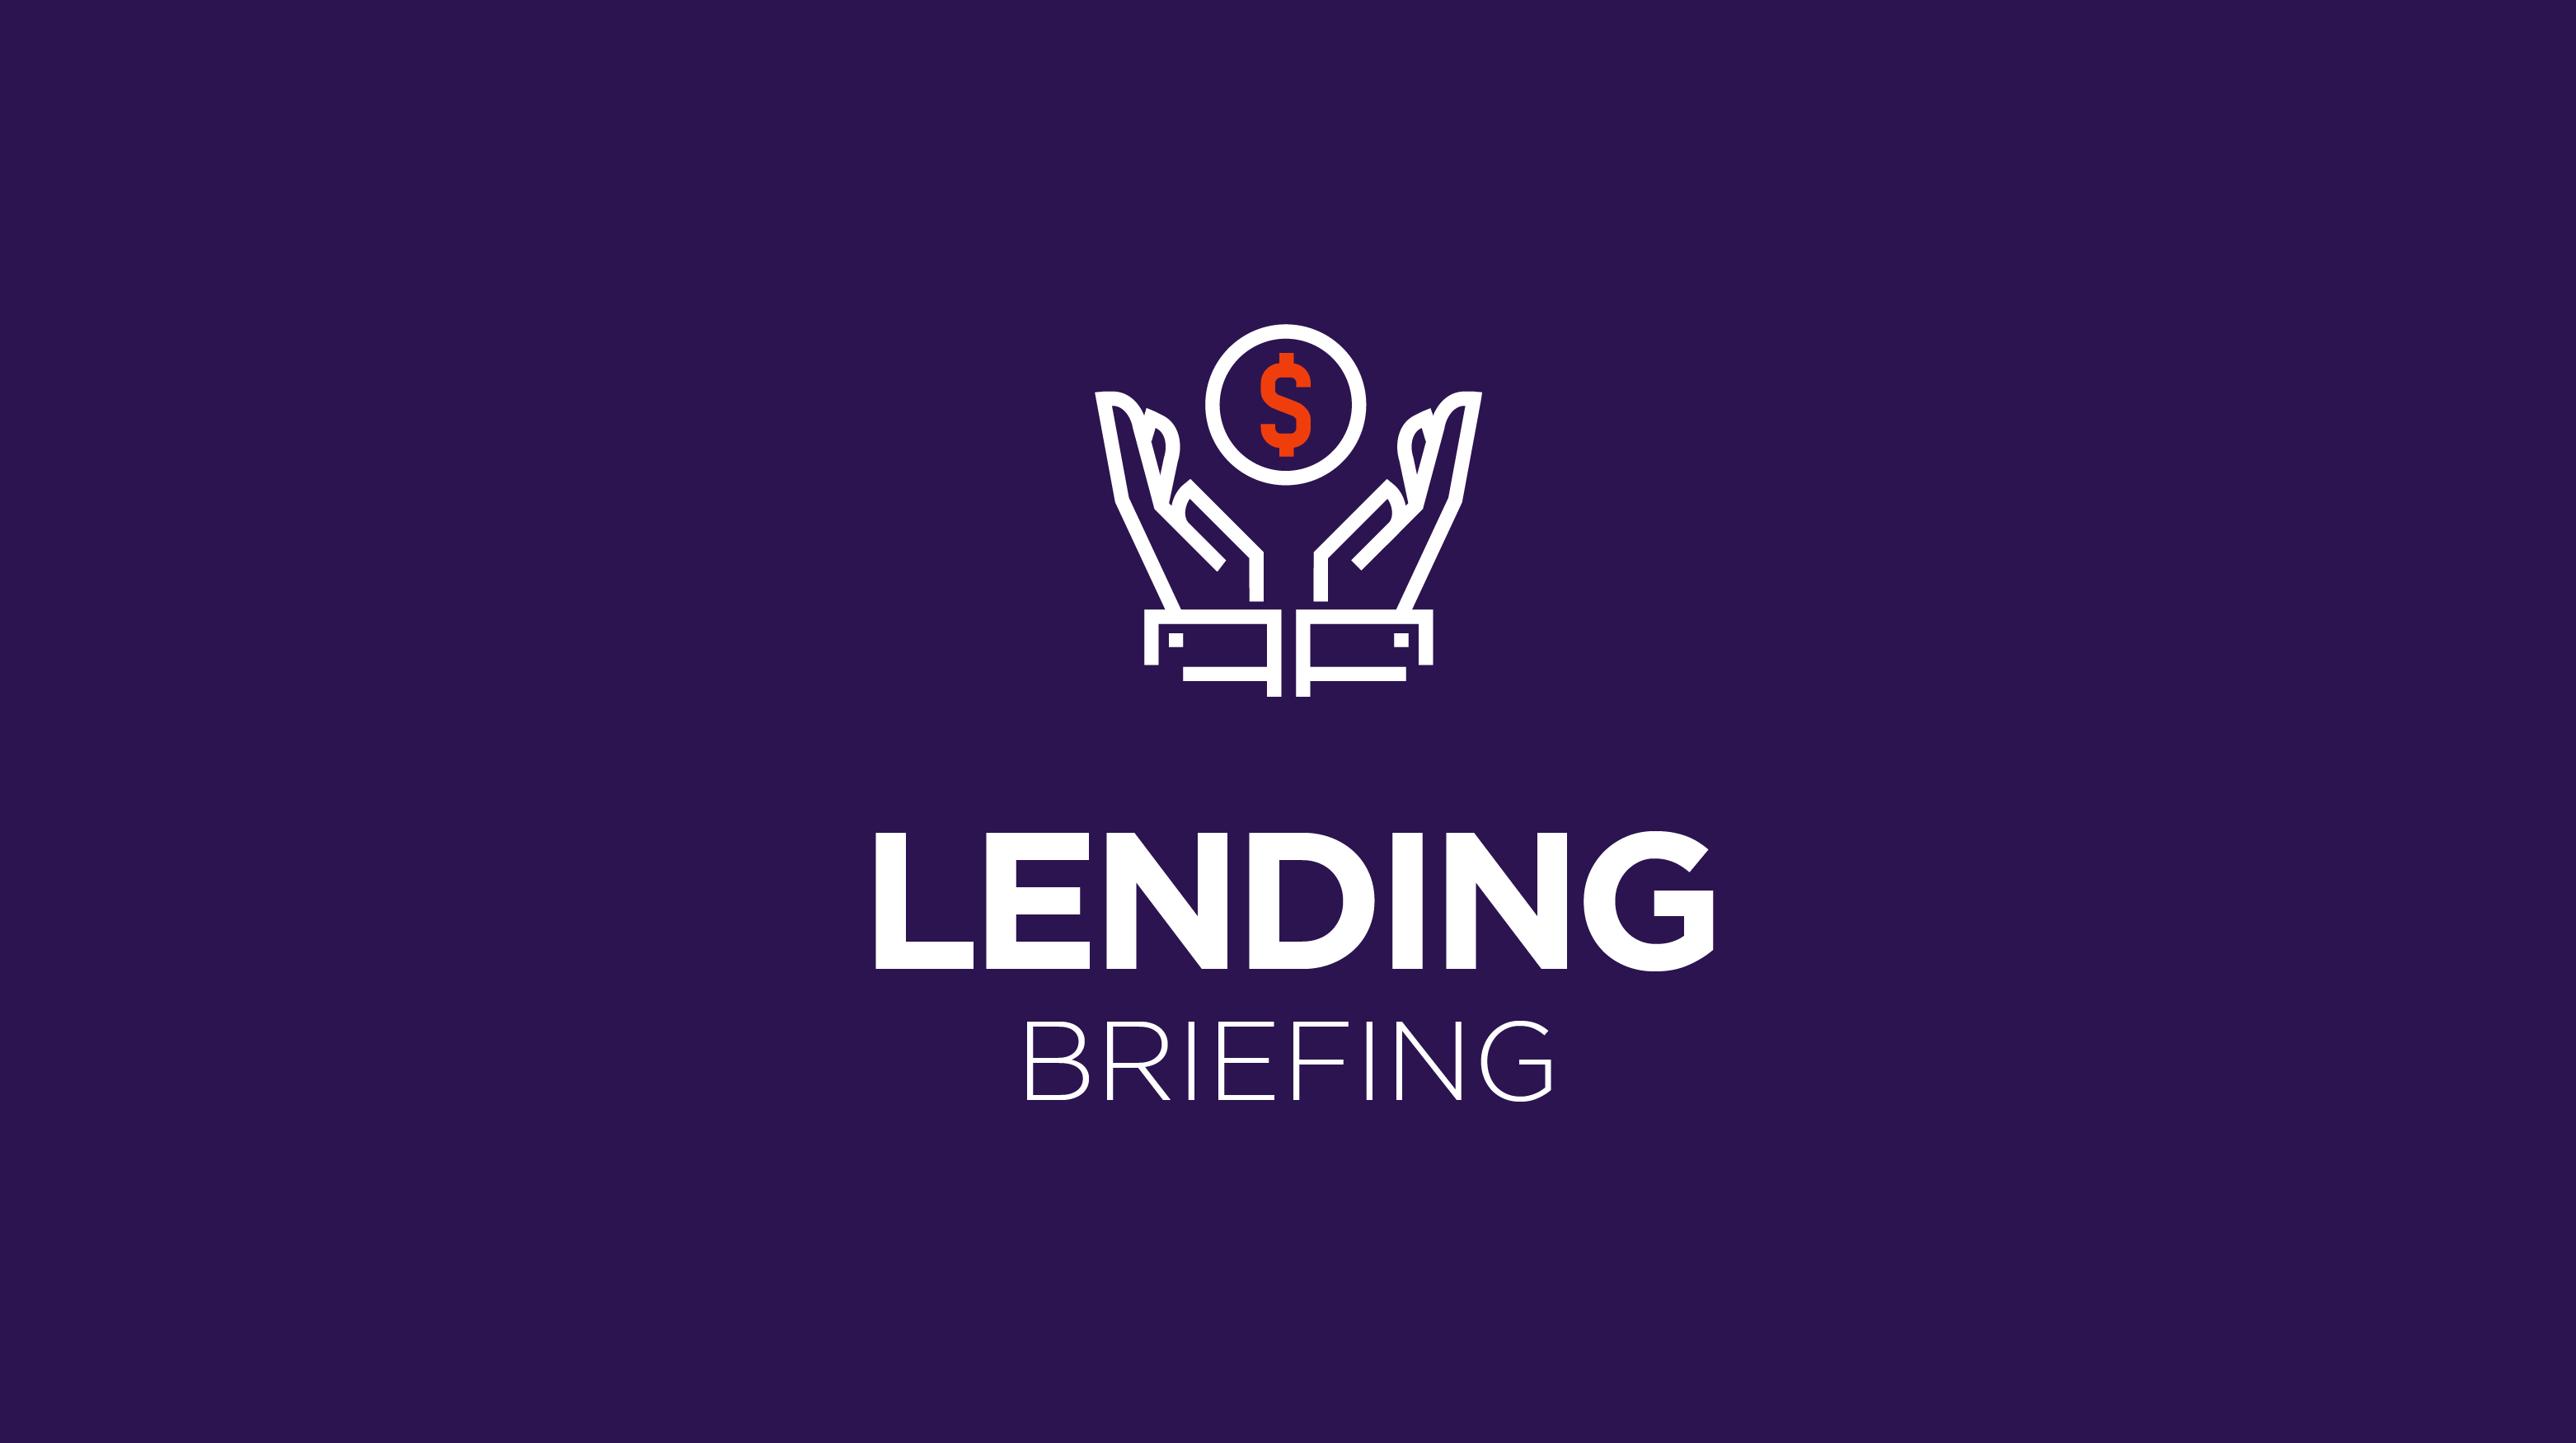 Lending Briefing: BNPL regulation and the growing digital lending market